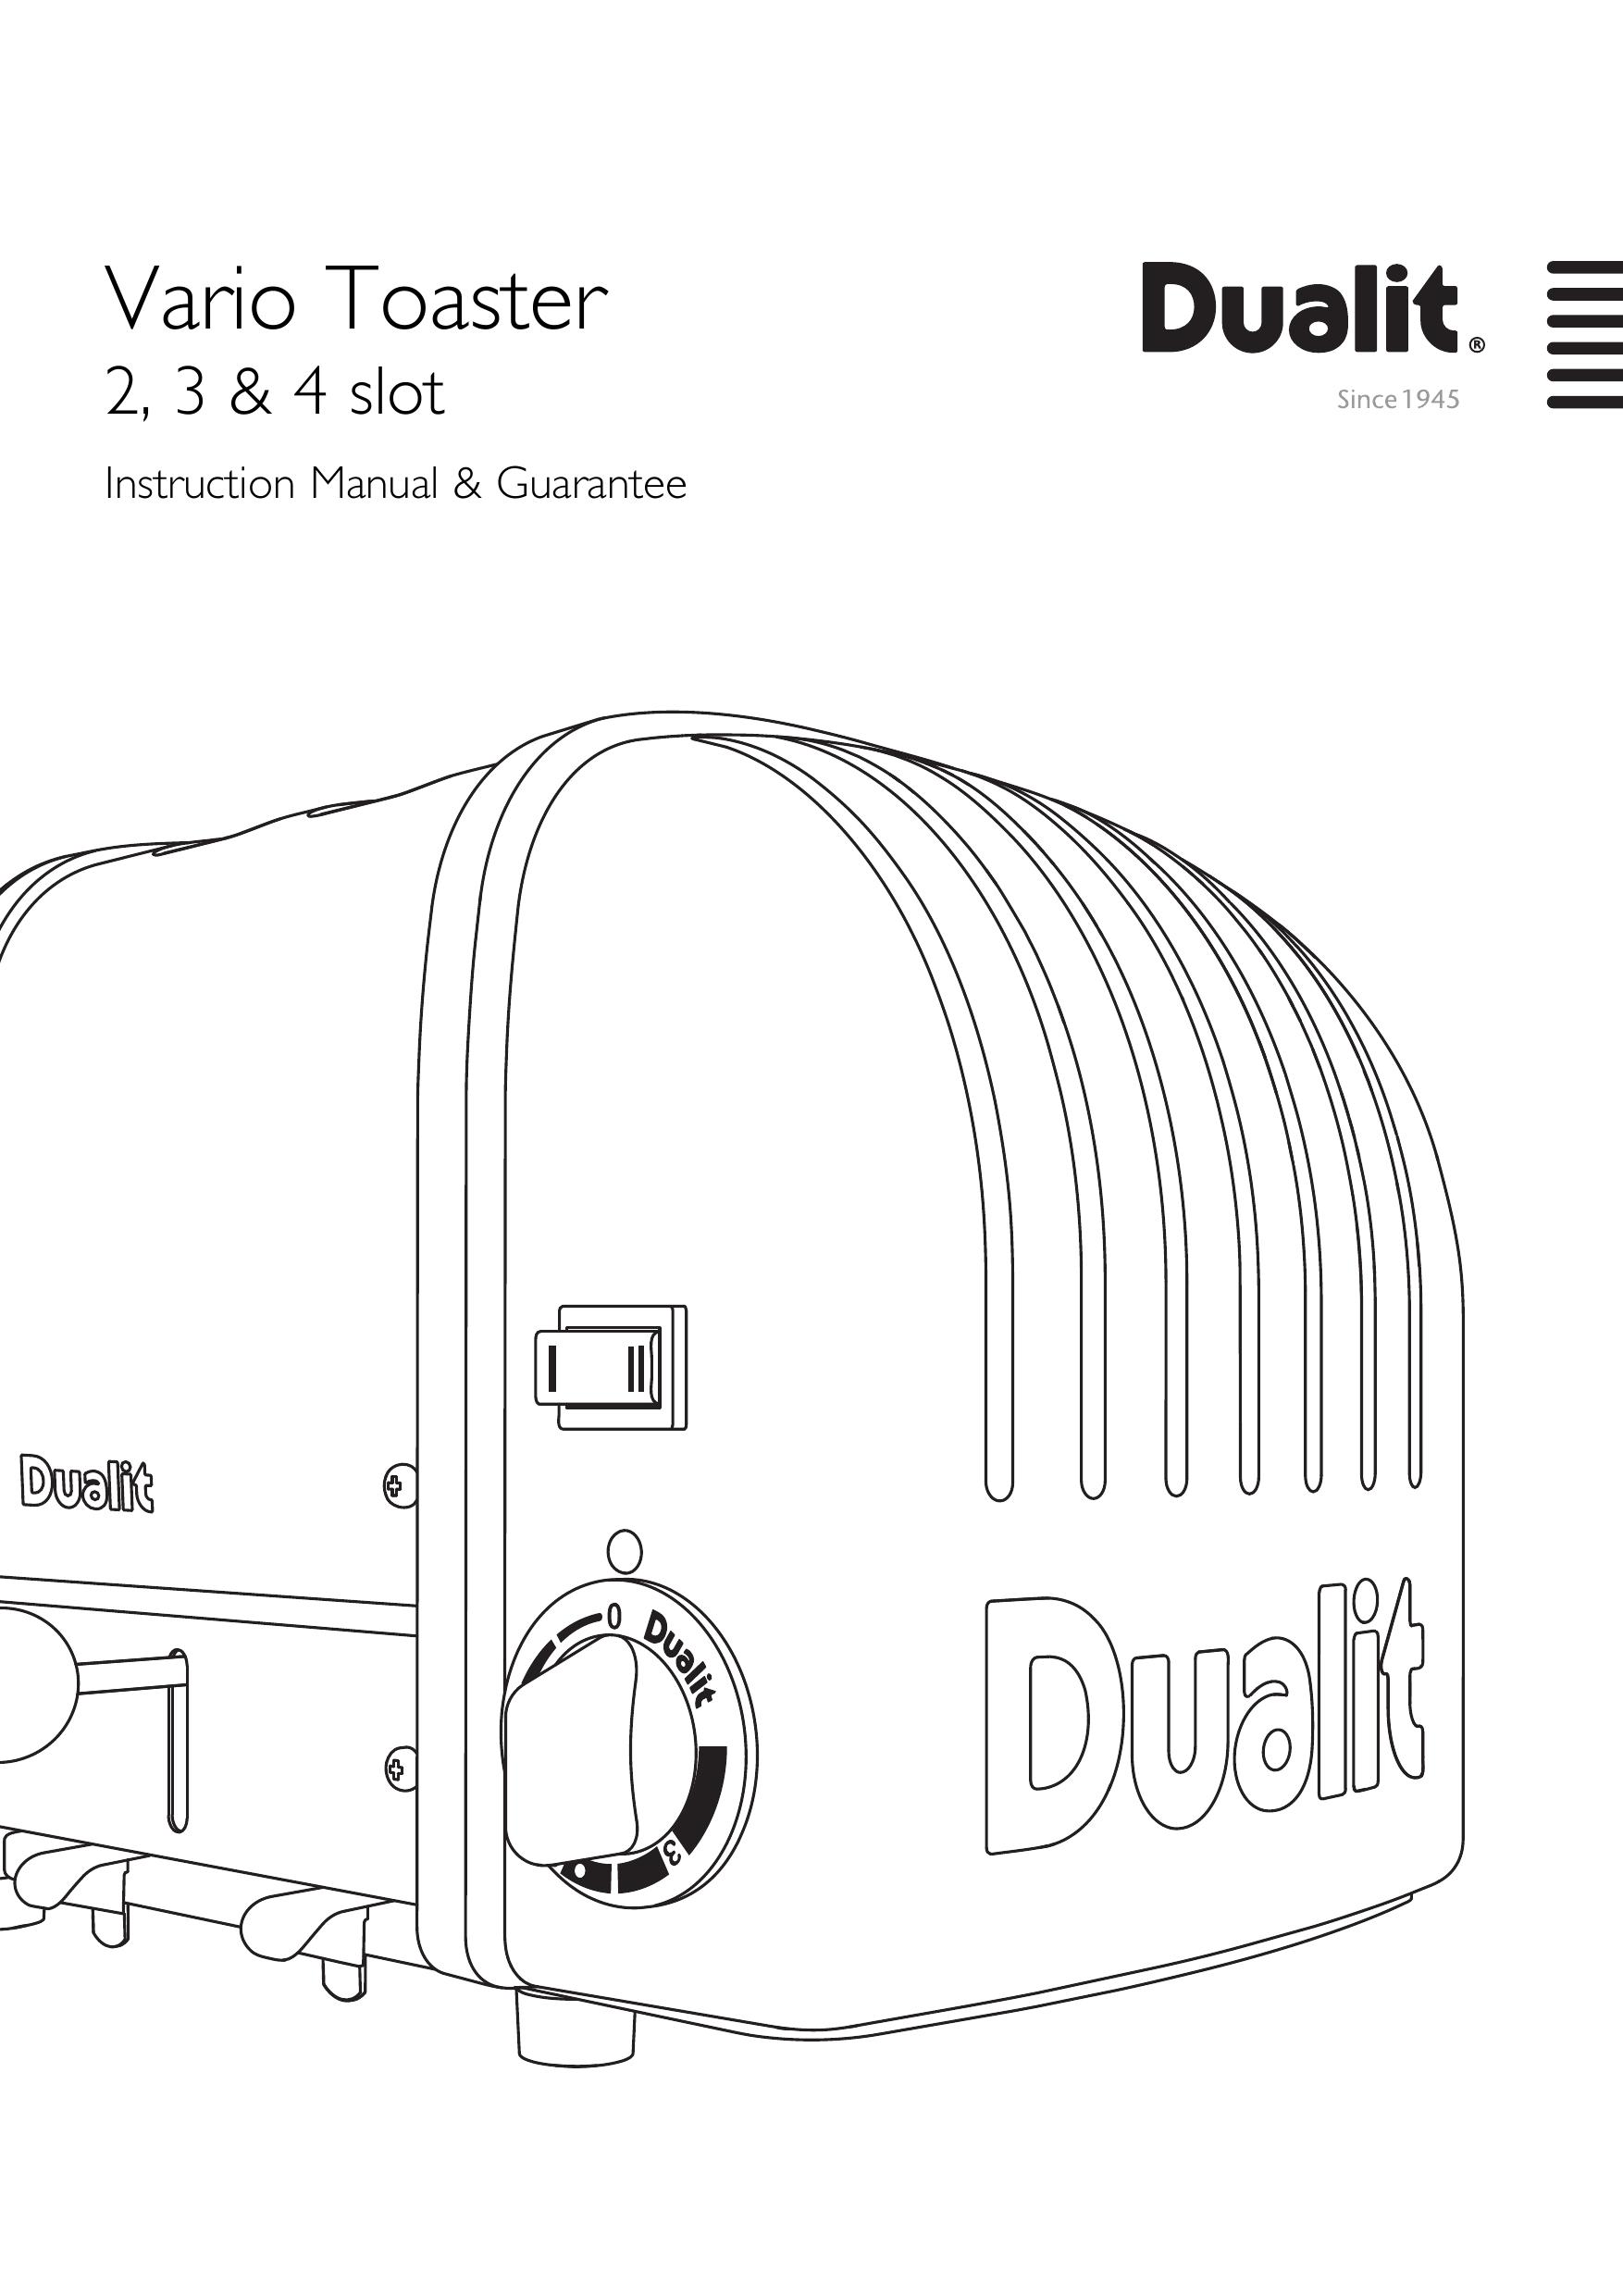 Dualit 40415 Toaster User Manual